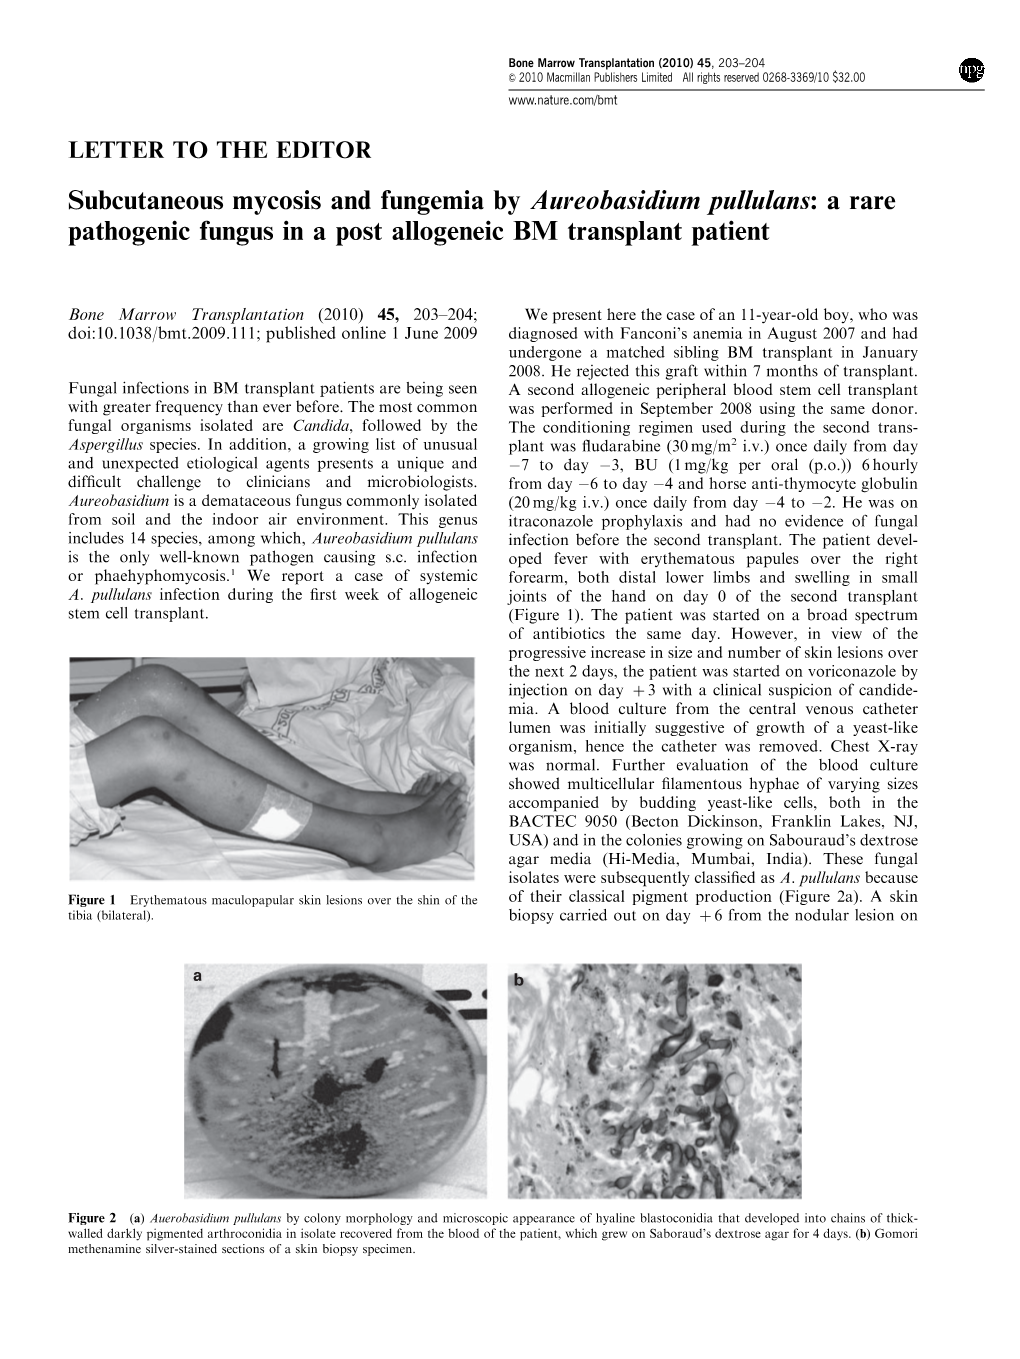 Subcutaneous Mycosis and Fungemia by Aureobasidium Pullulans: a Rare Pathogenic Fungus in a Post Allogeneic BM Transplant Patient